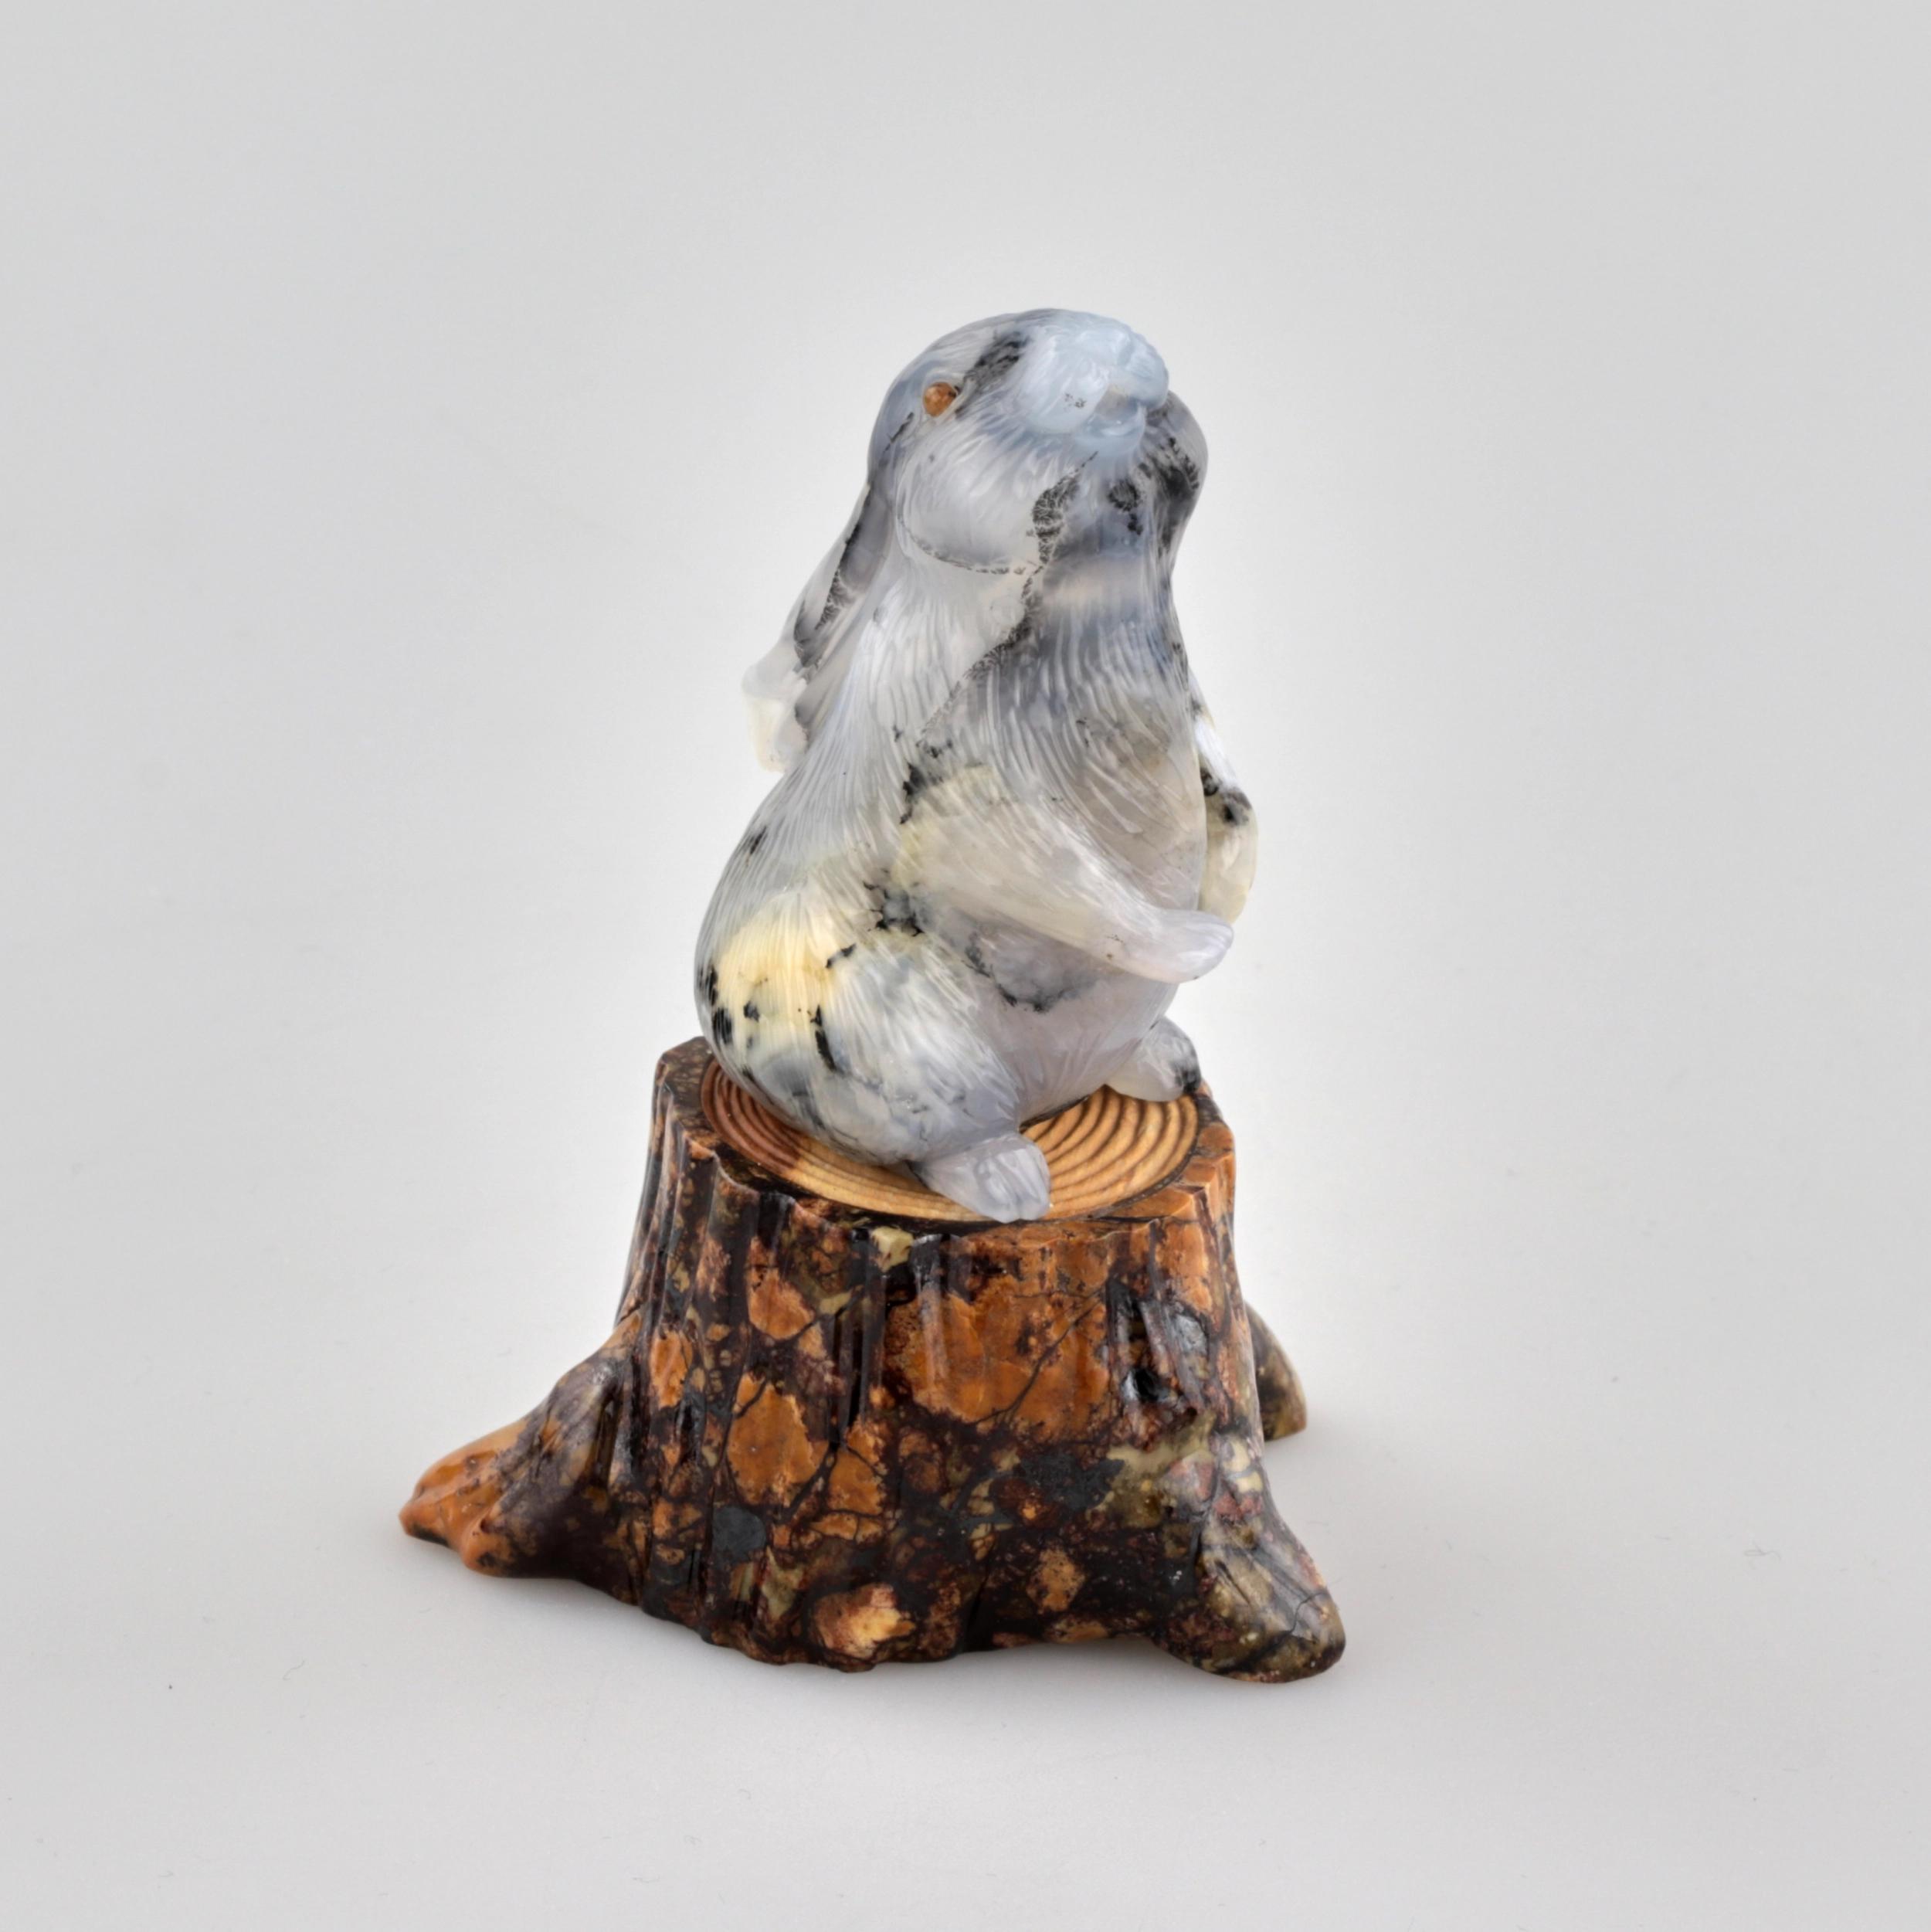 Figurine "Hare on a stump" - Image 6 of 6